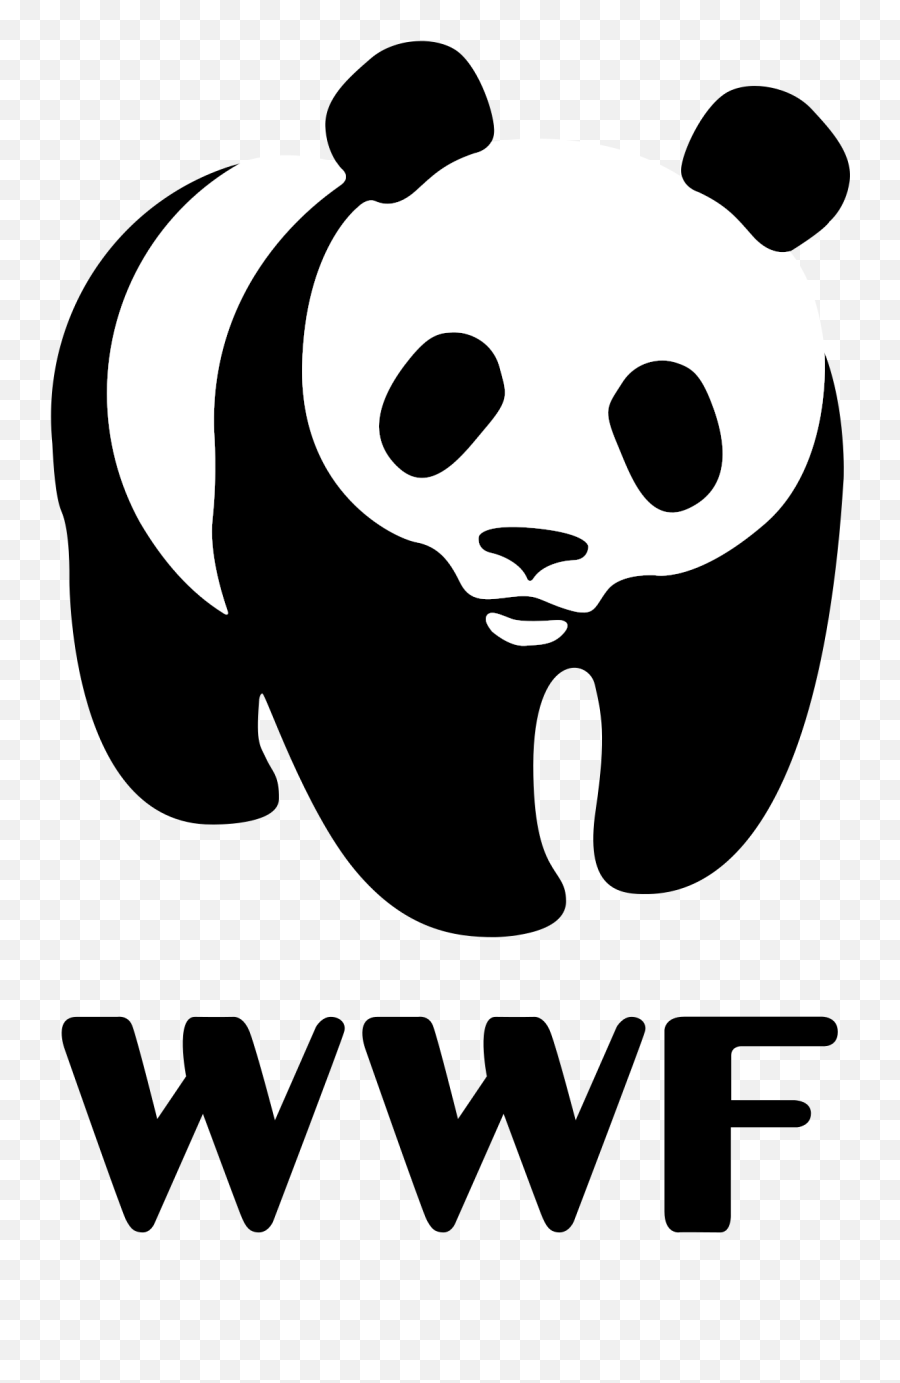 Why Did World Wrestling Federation Lose The Wwf Trademark - World Wildlife Fund Png,New Japan Pro Wrestling Logo